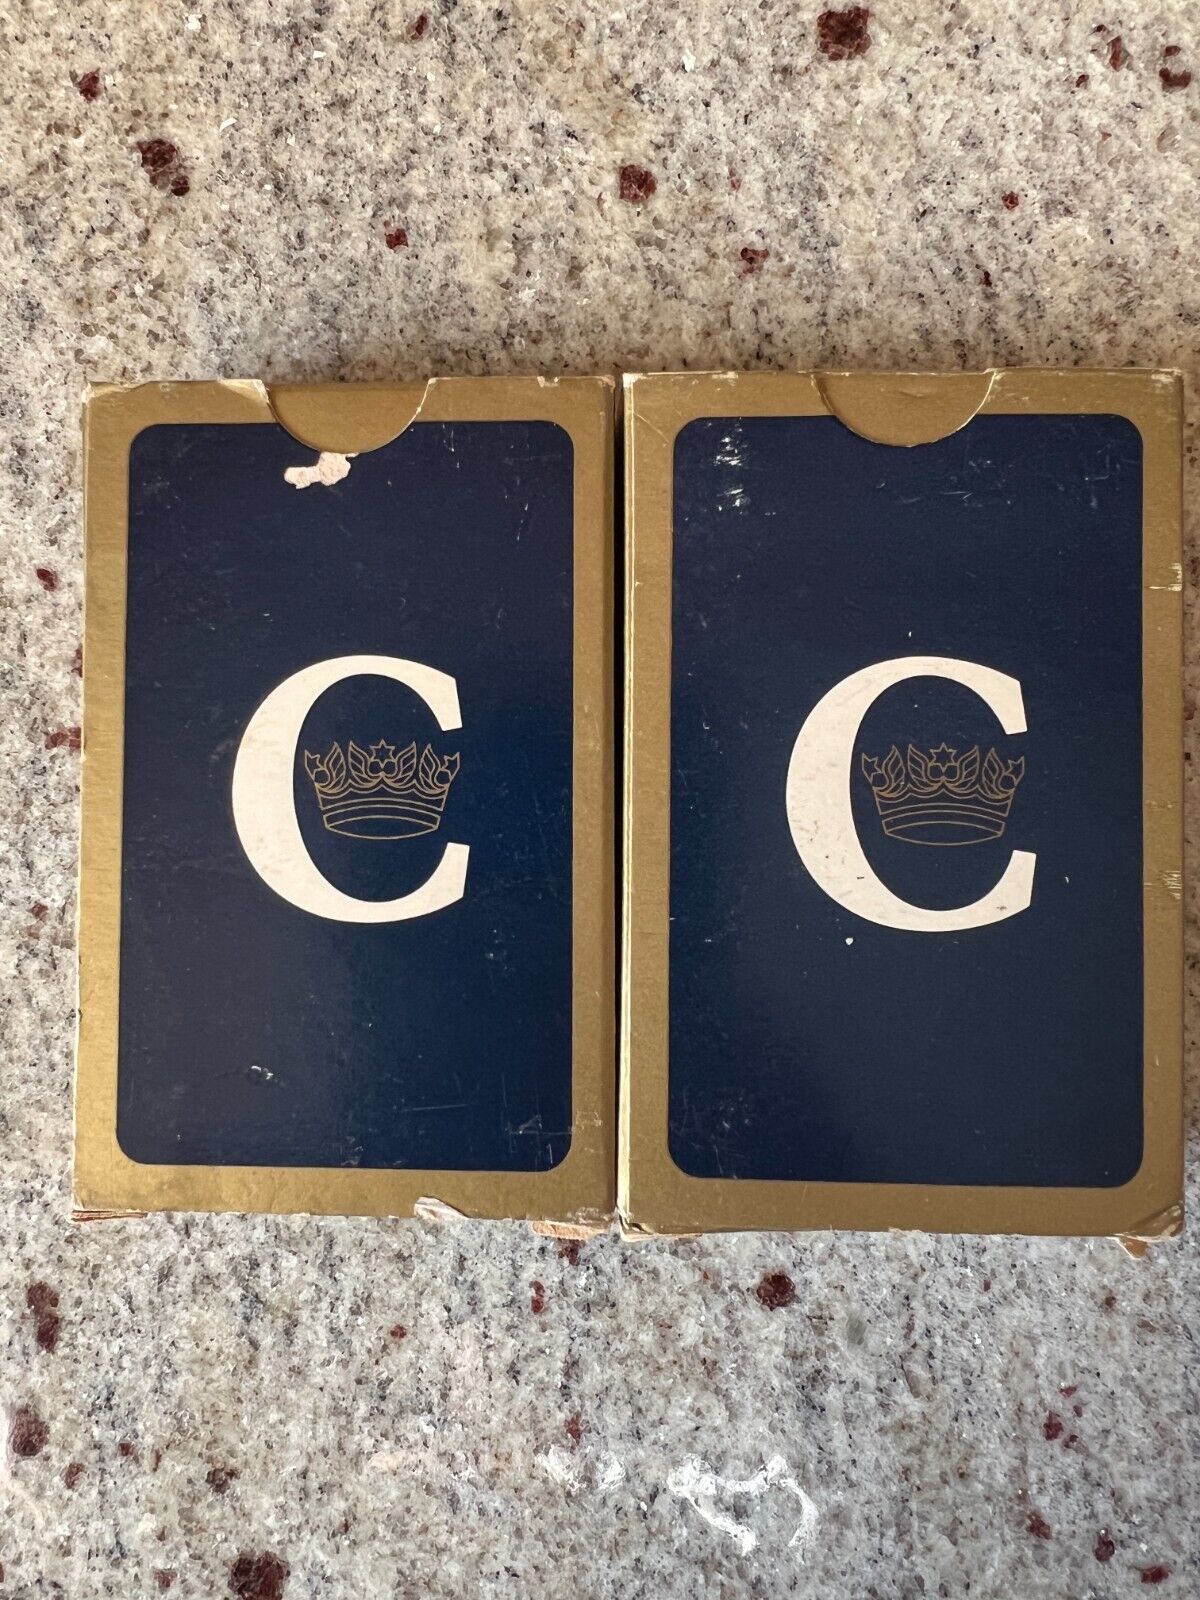 2 decks Concorde British Airways playing cards, single Crown in C logo, 1 sealed